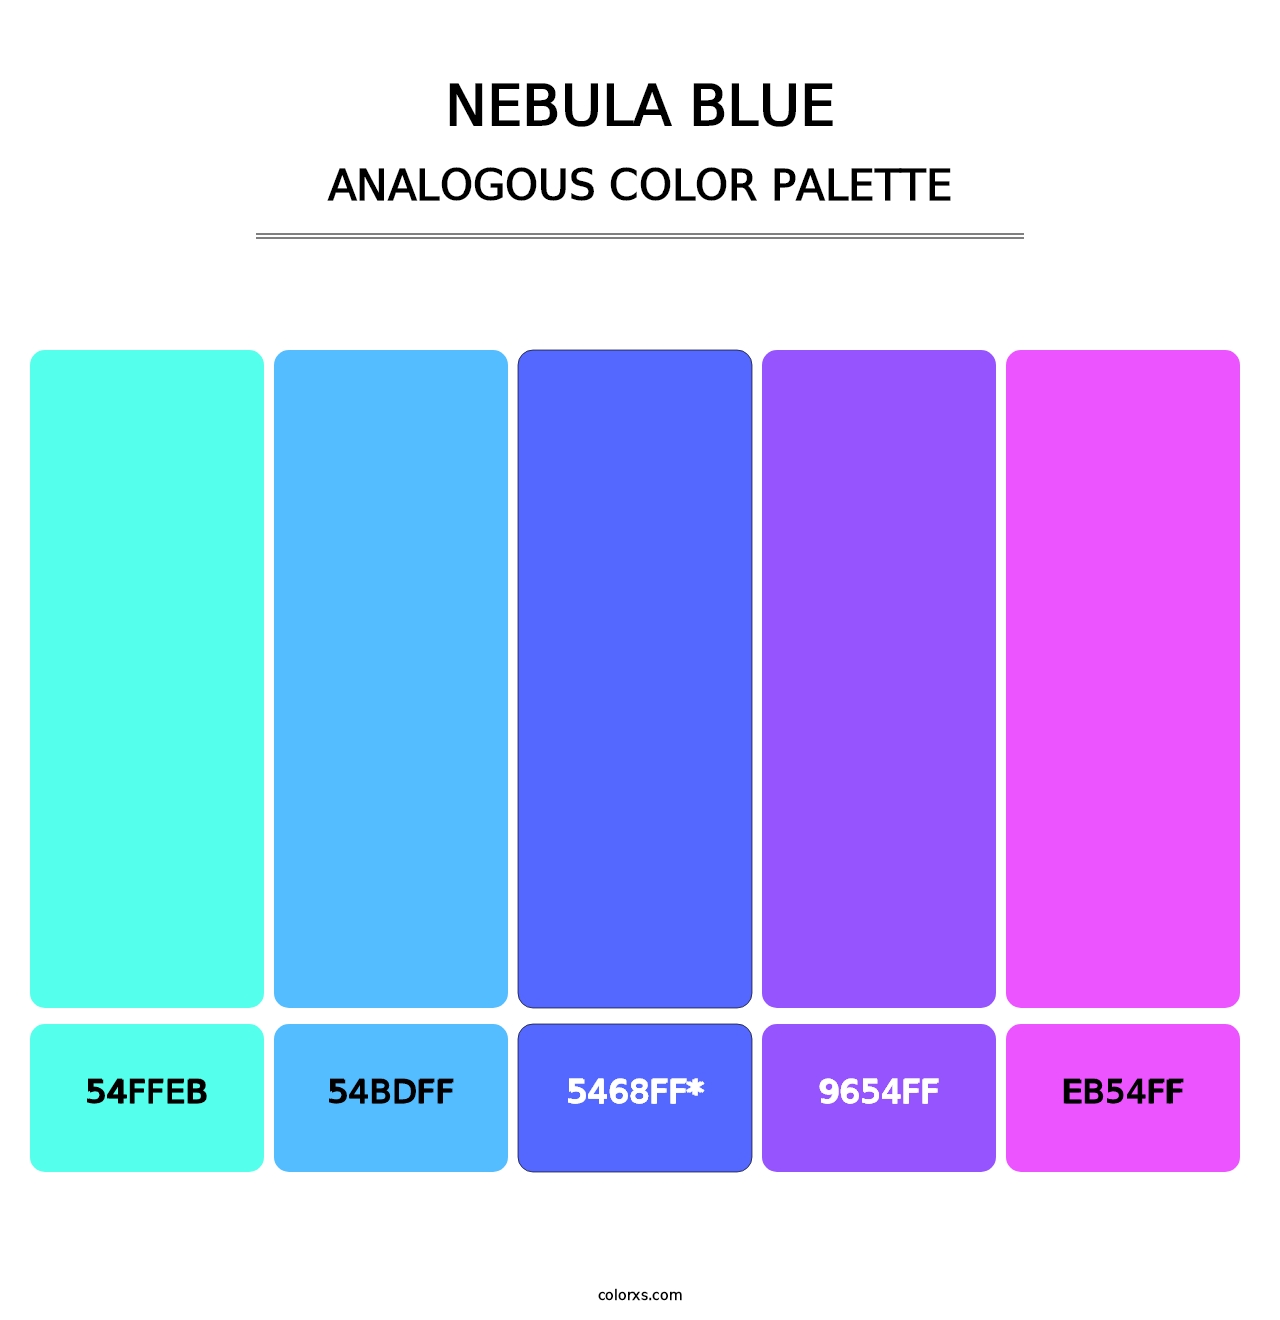 Nebula Blue - Analogous Color Palette